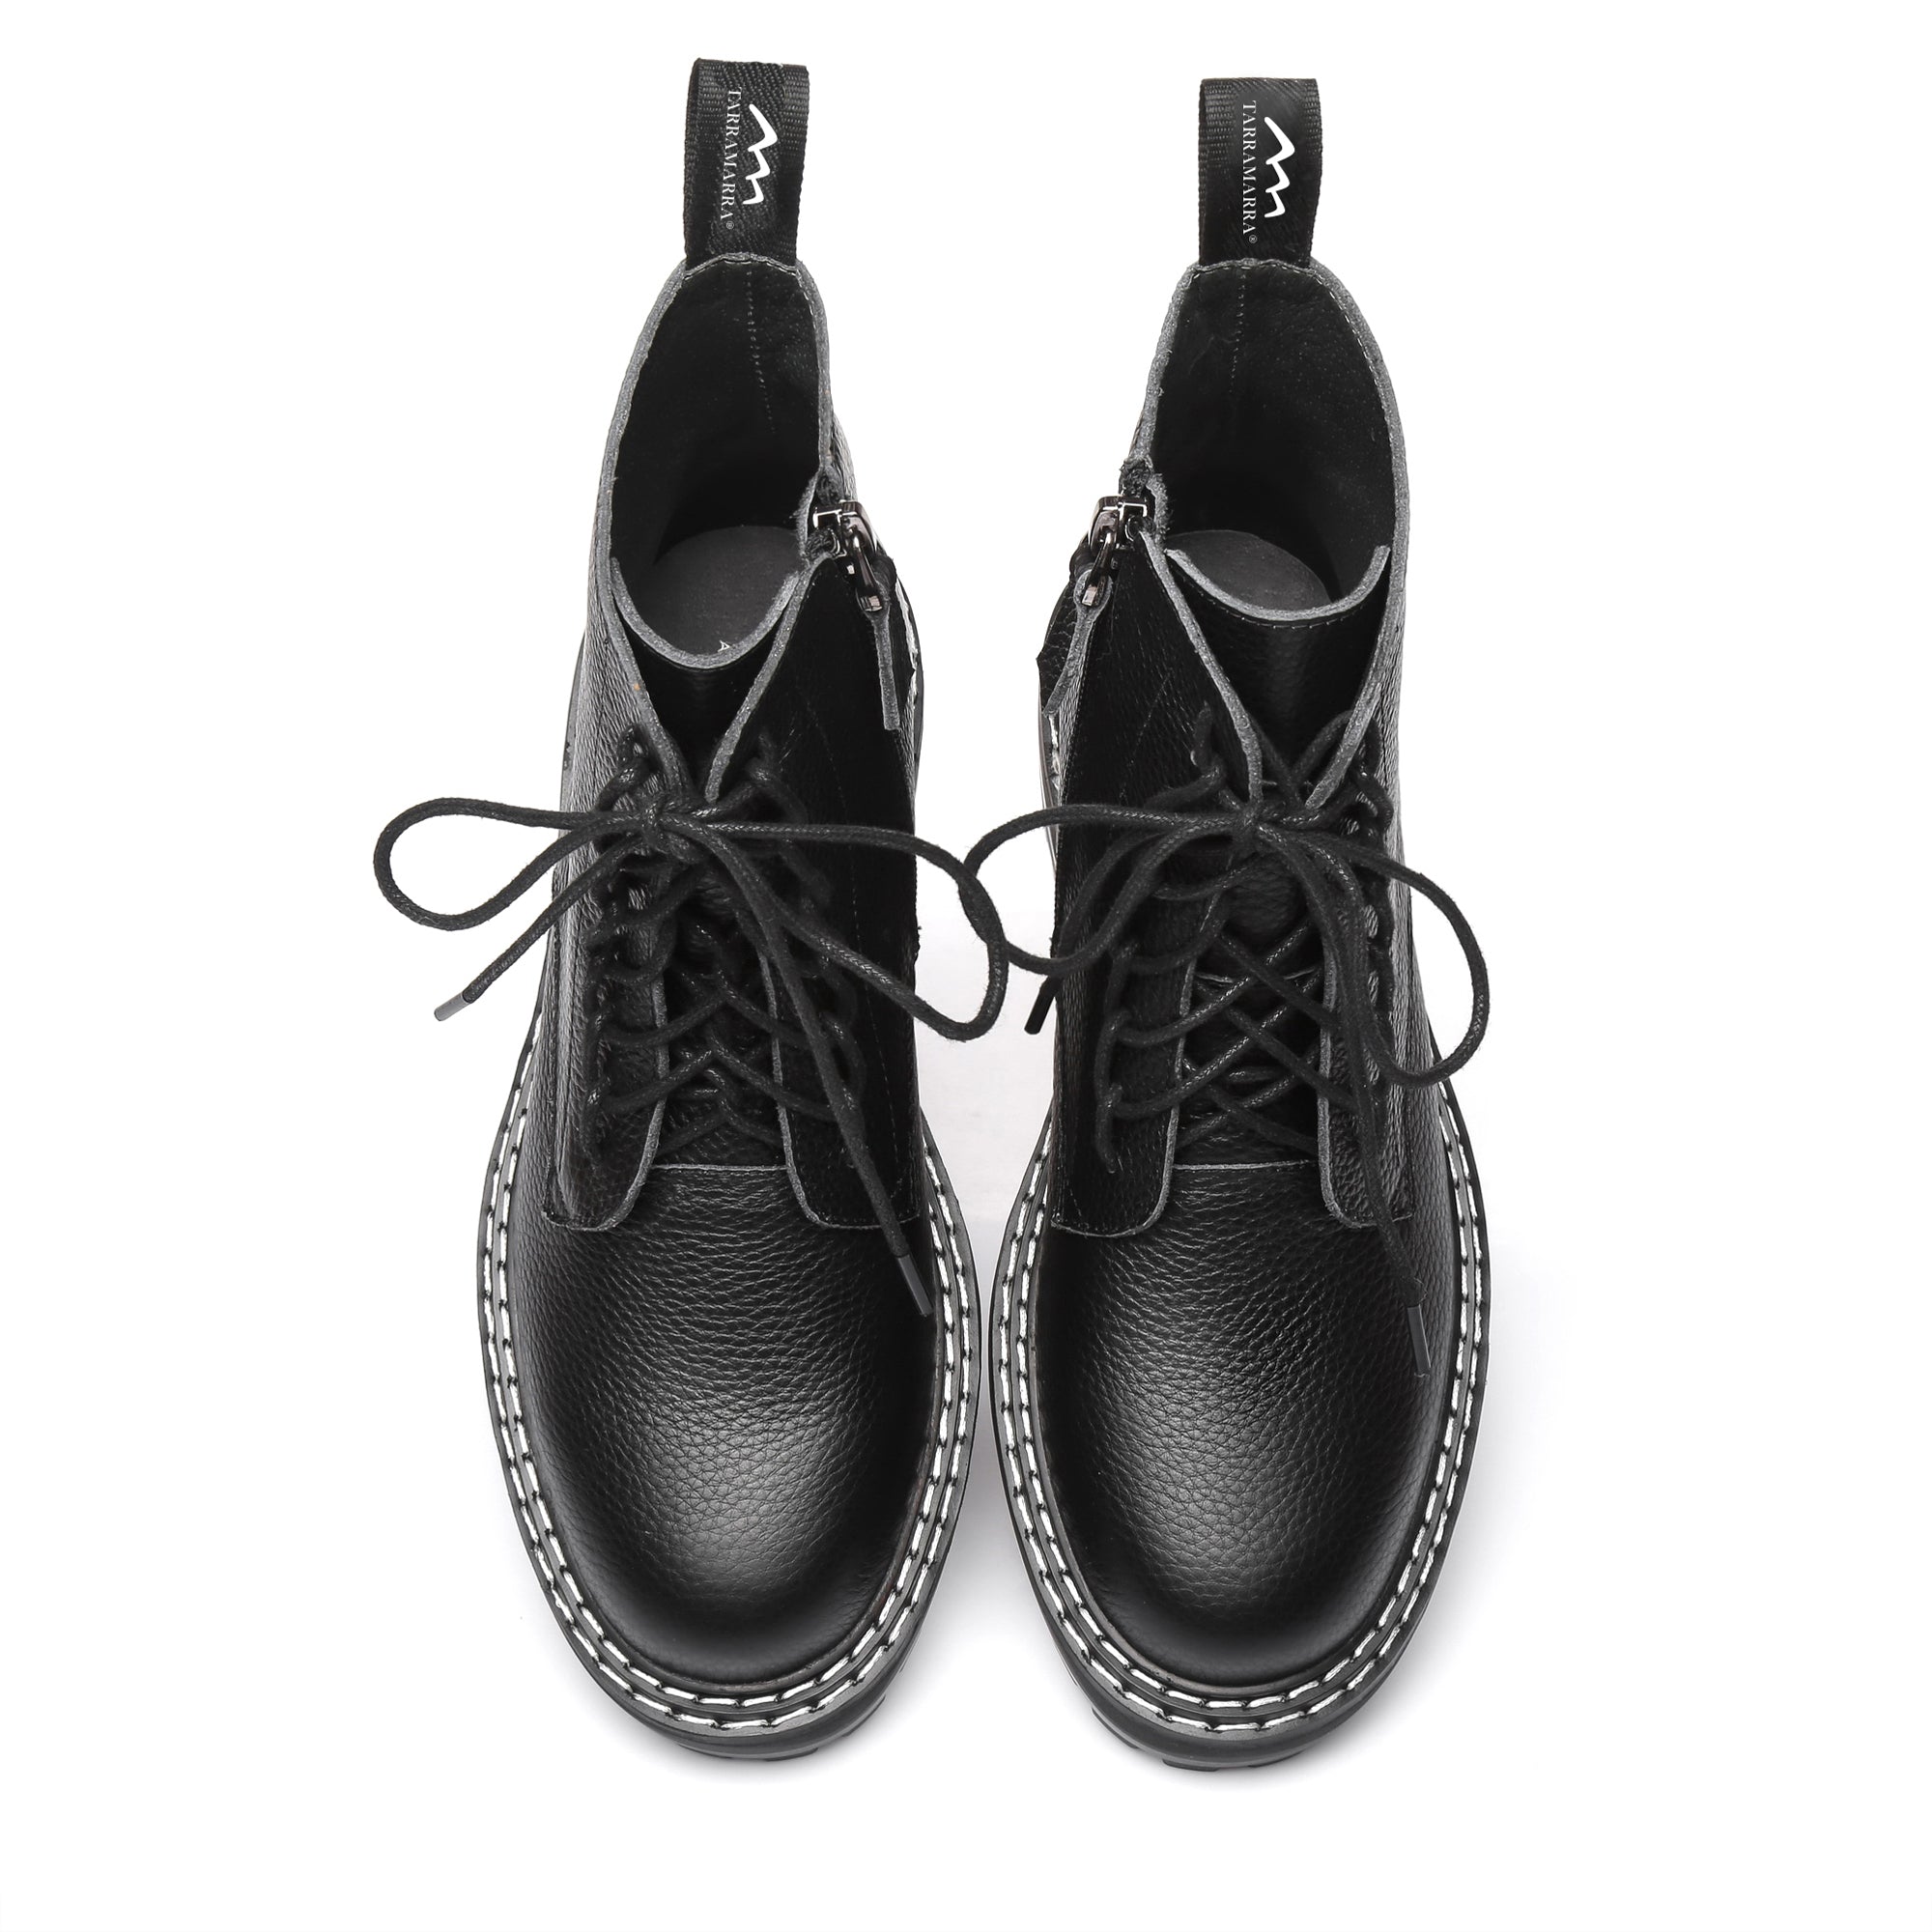 Logan Black Leather Boots